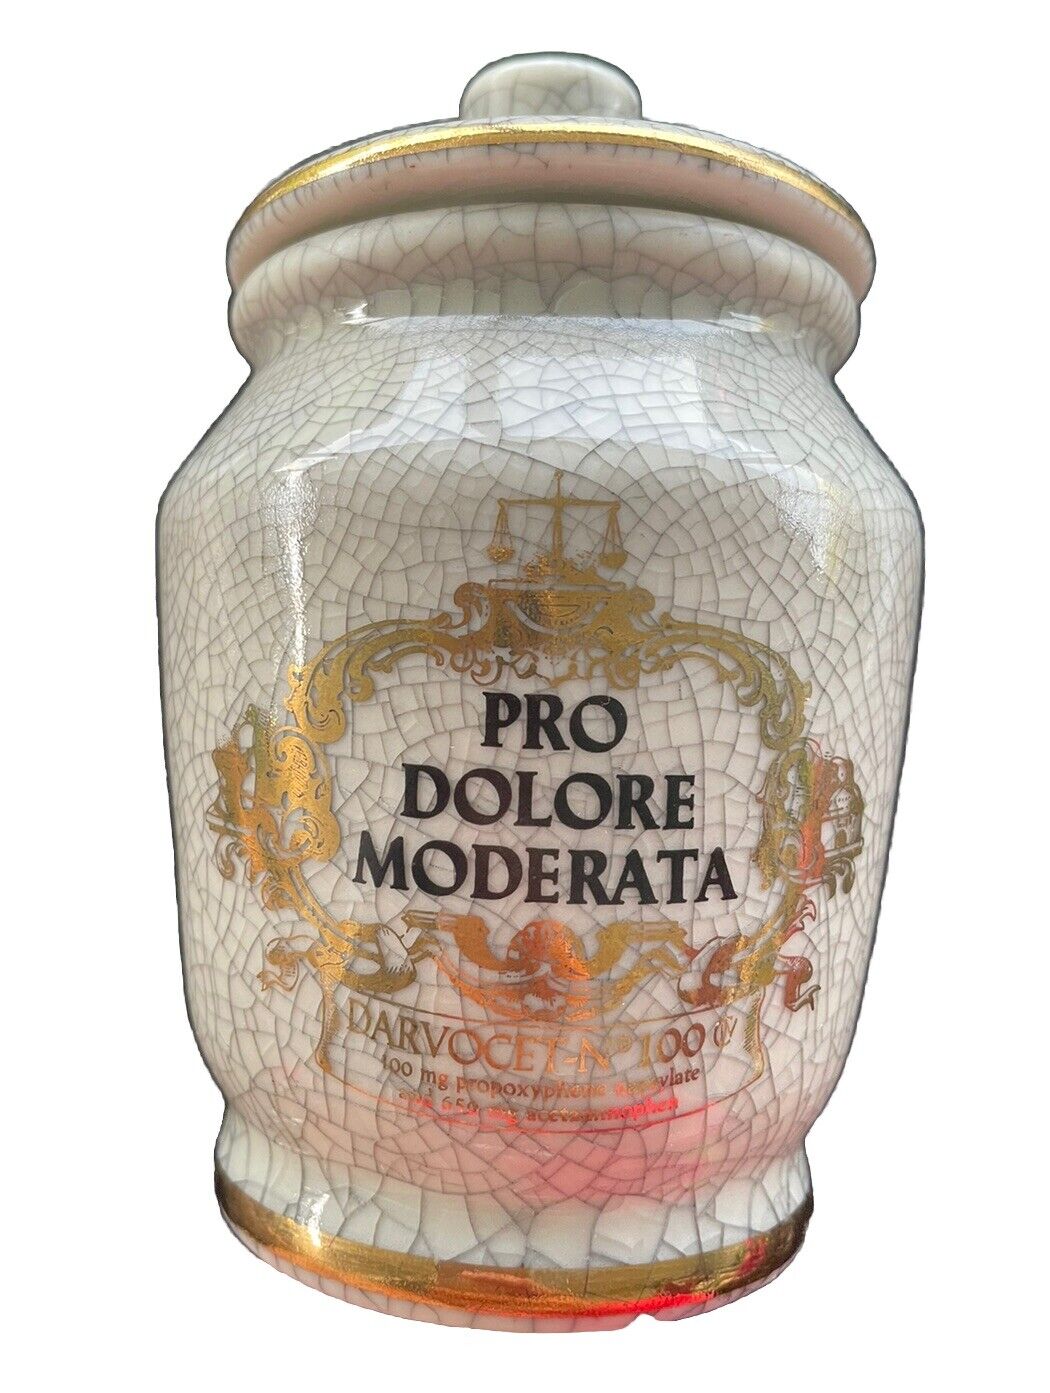 Eli Lilly Apothecary Jar Pro Dolore Moderata Darvocet Vintage 1970’s